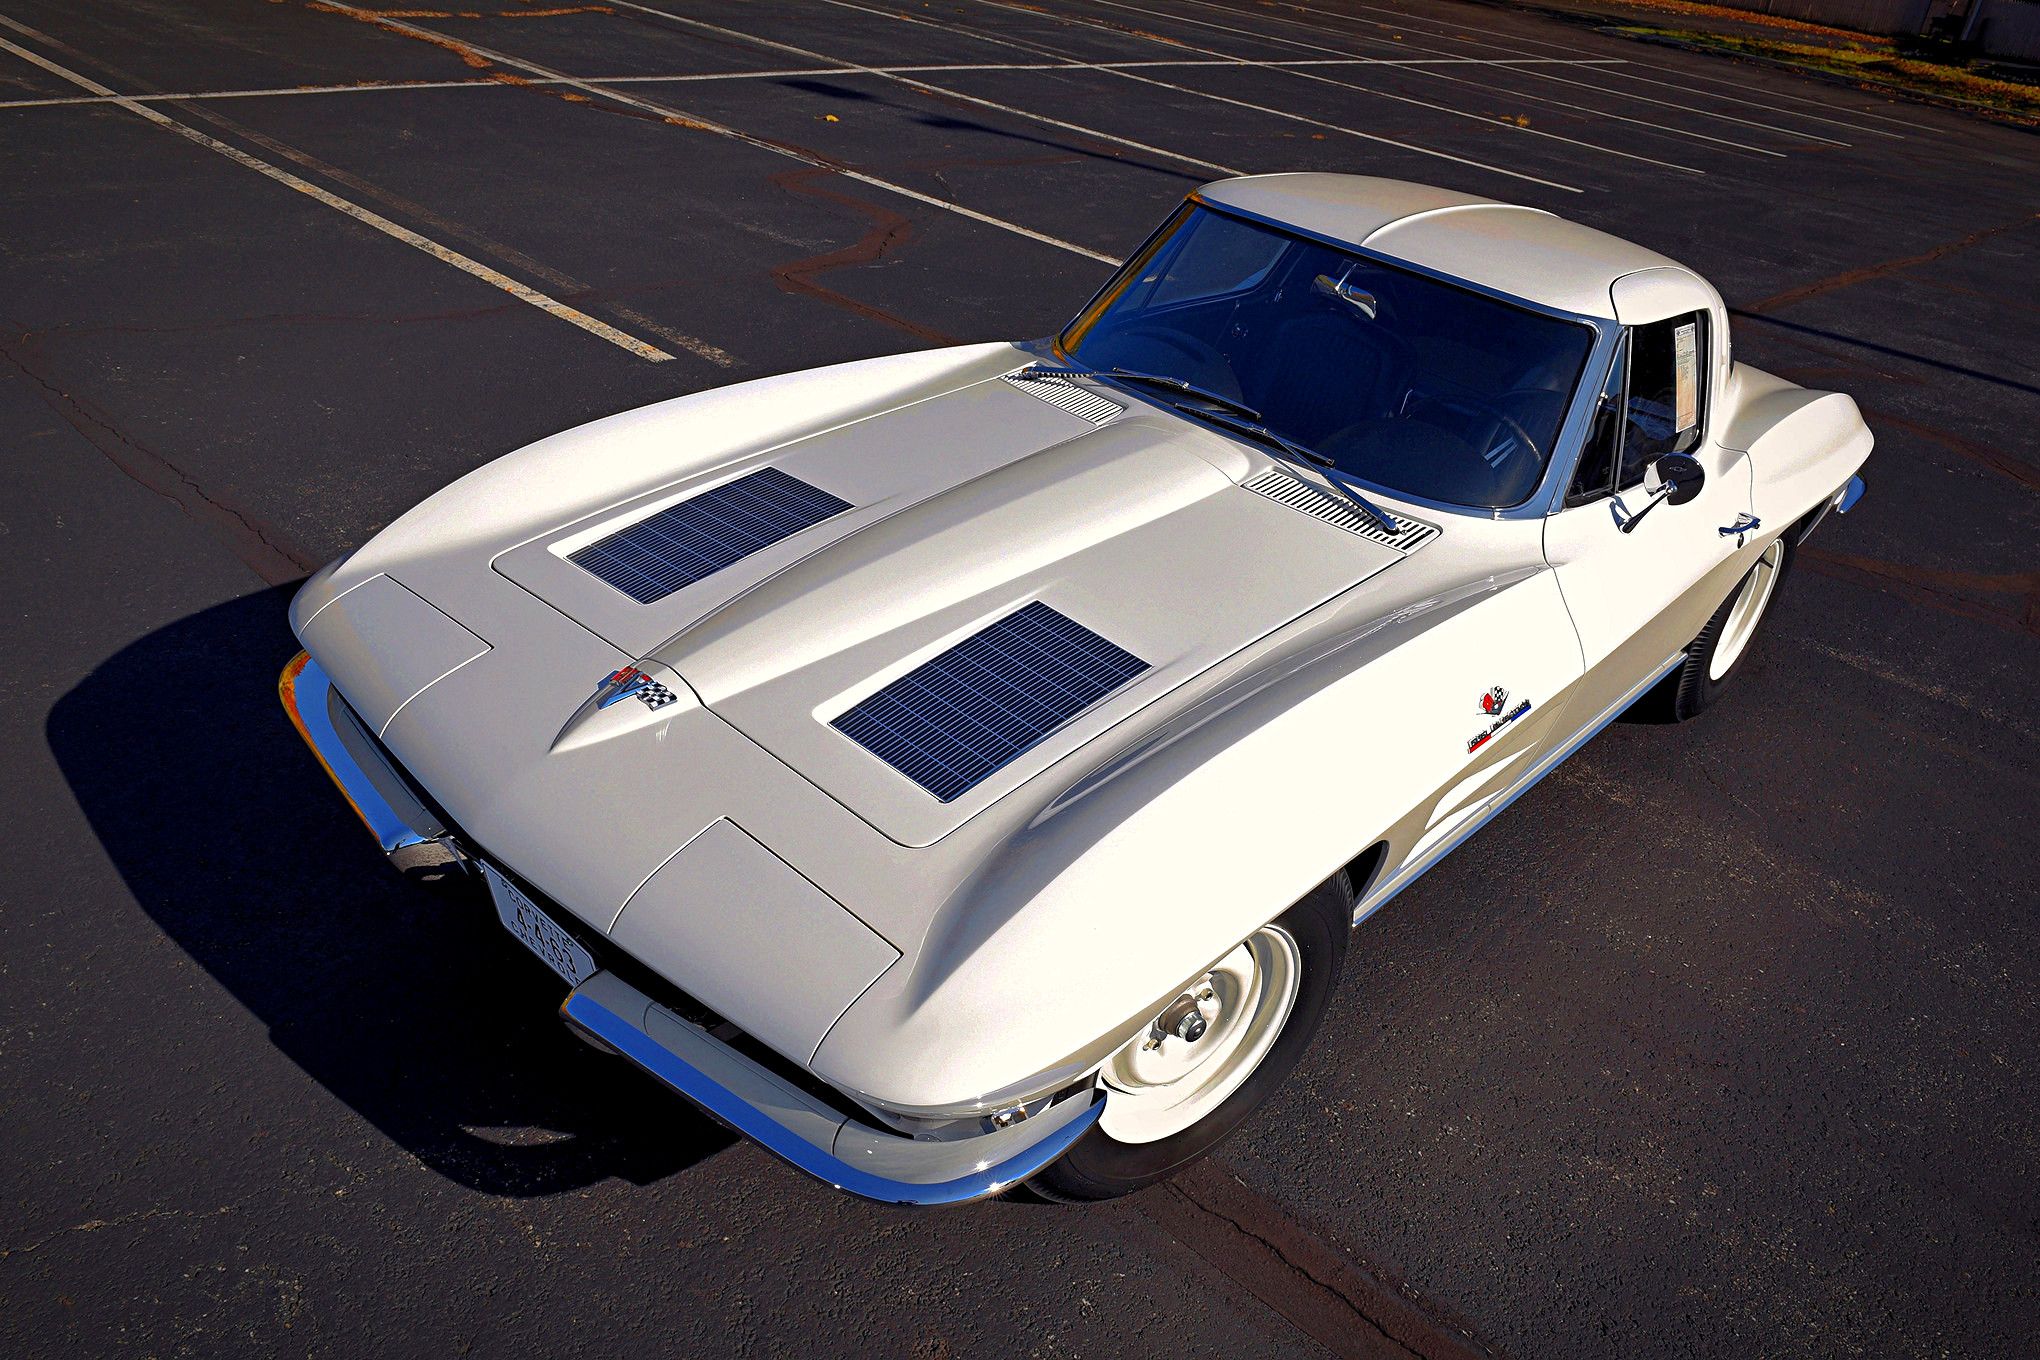 05-1963-corvette-c2-Z06-fuel-injection-split-window-coupe-big-tank-cannizzo.jpg